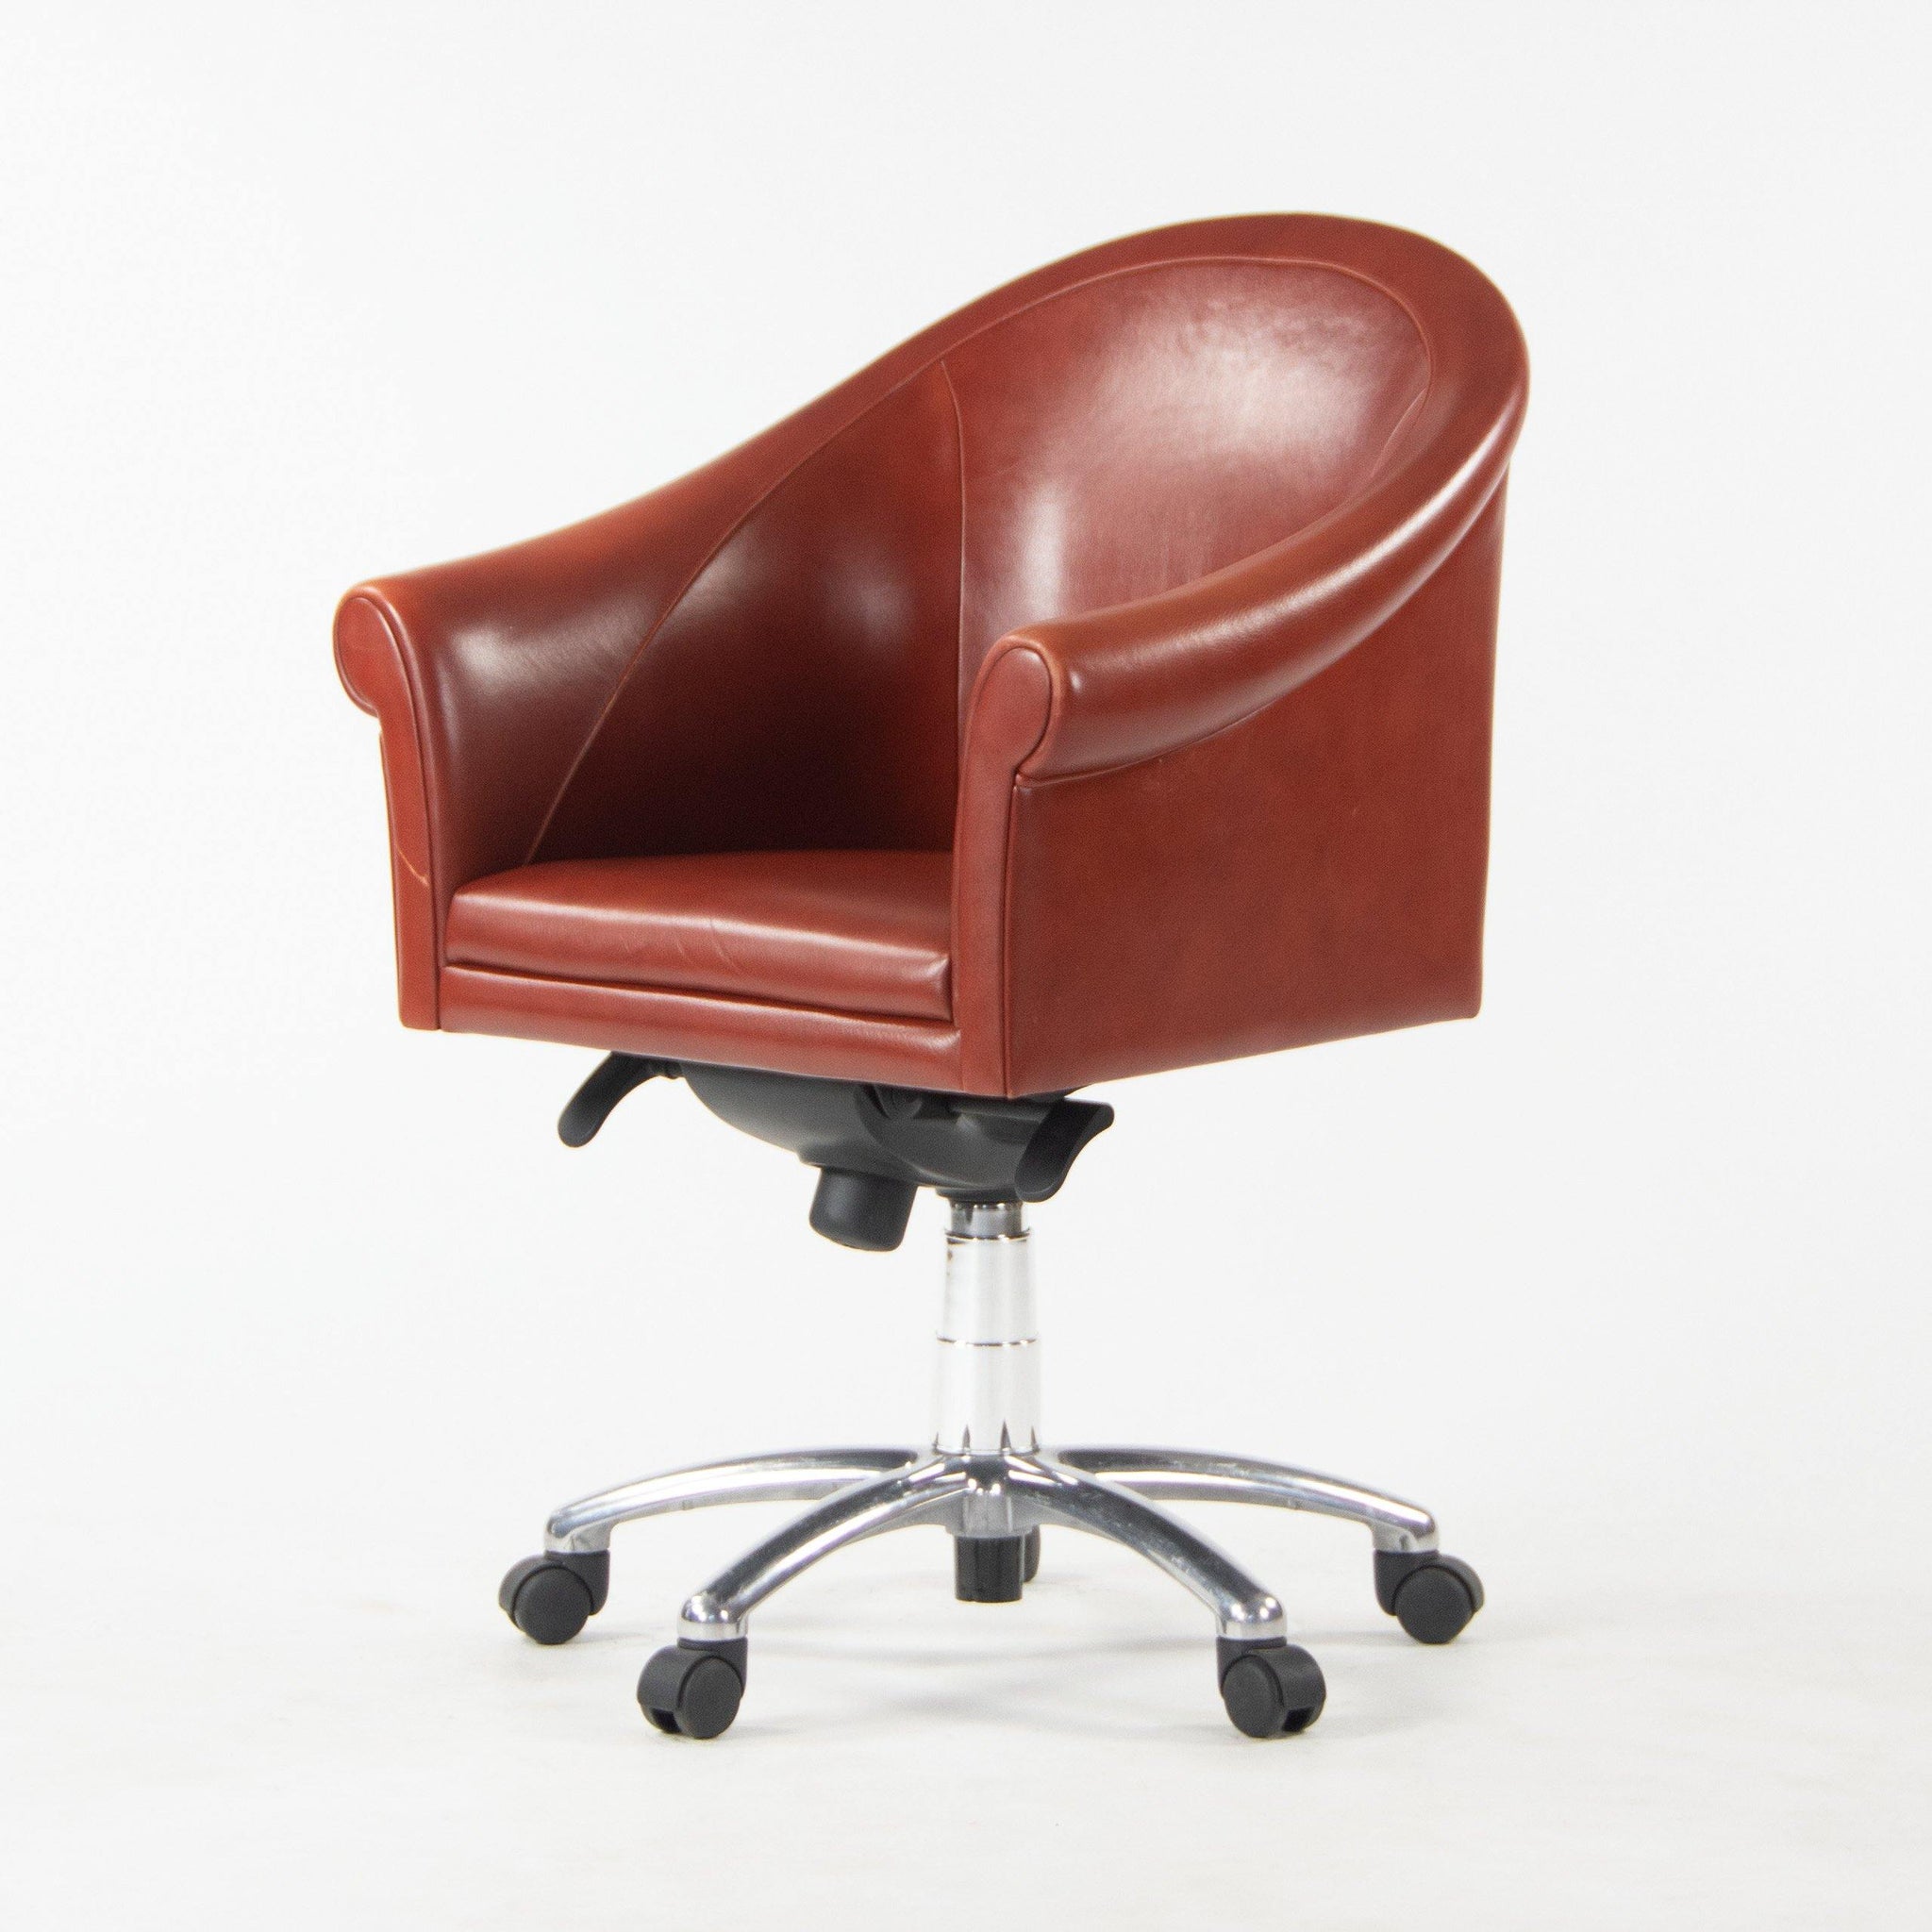 Poltrona Frau Red Leather Luca Scacchetti Sinan Office Desk Chair Multiples Available - Rarify Inc.